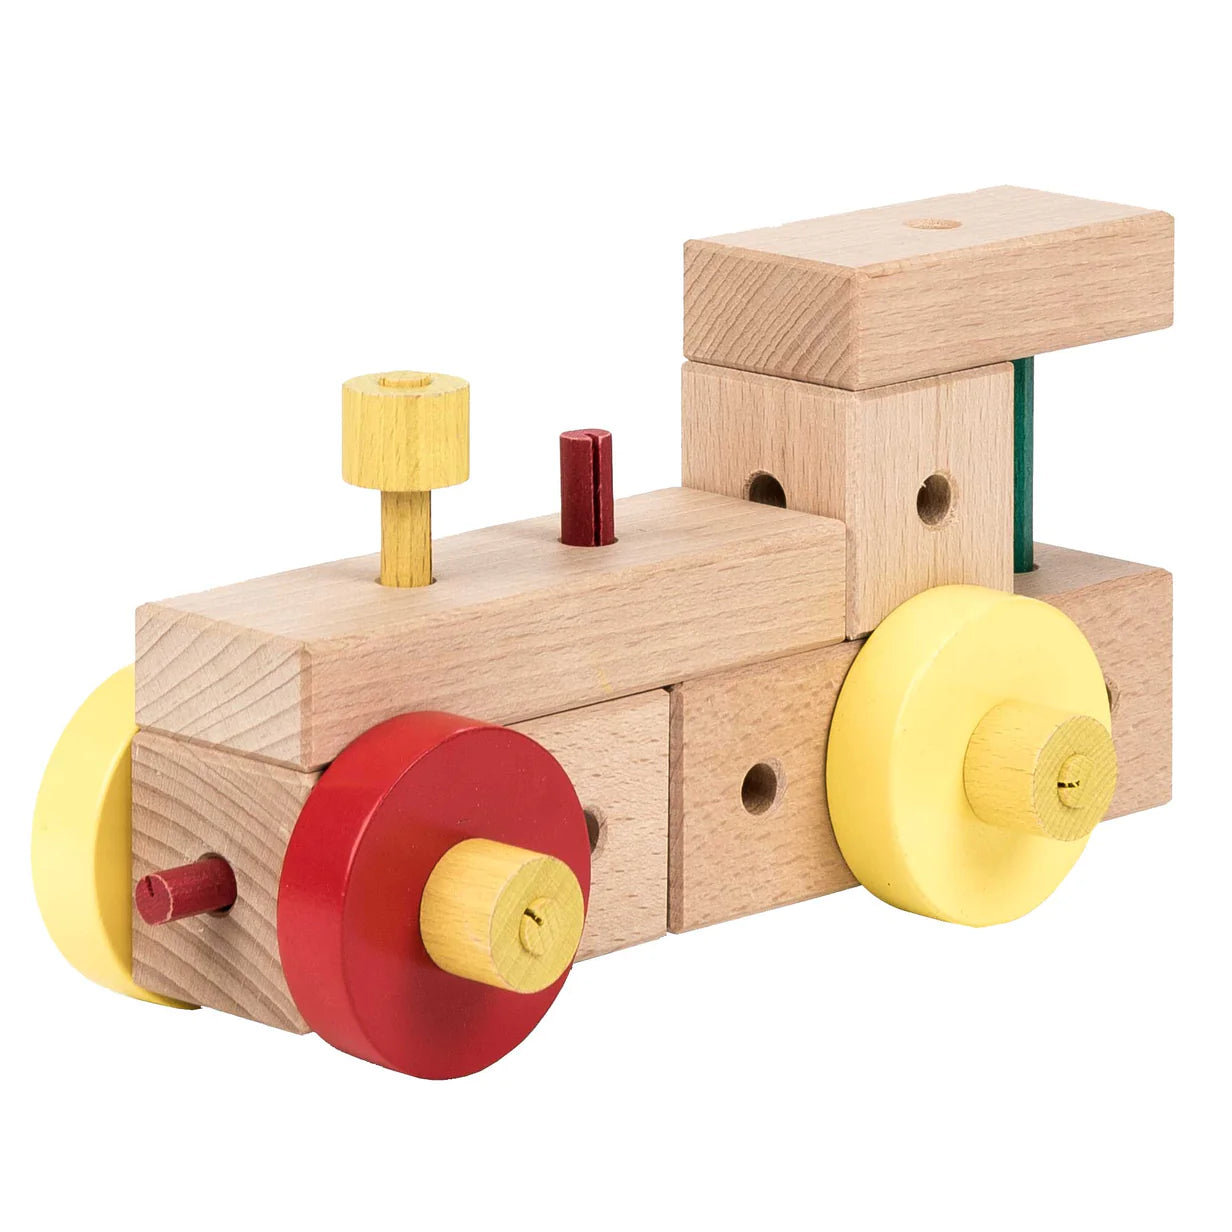 Matador Maker - Wooden Construction Kit  - M070 - 3+